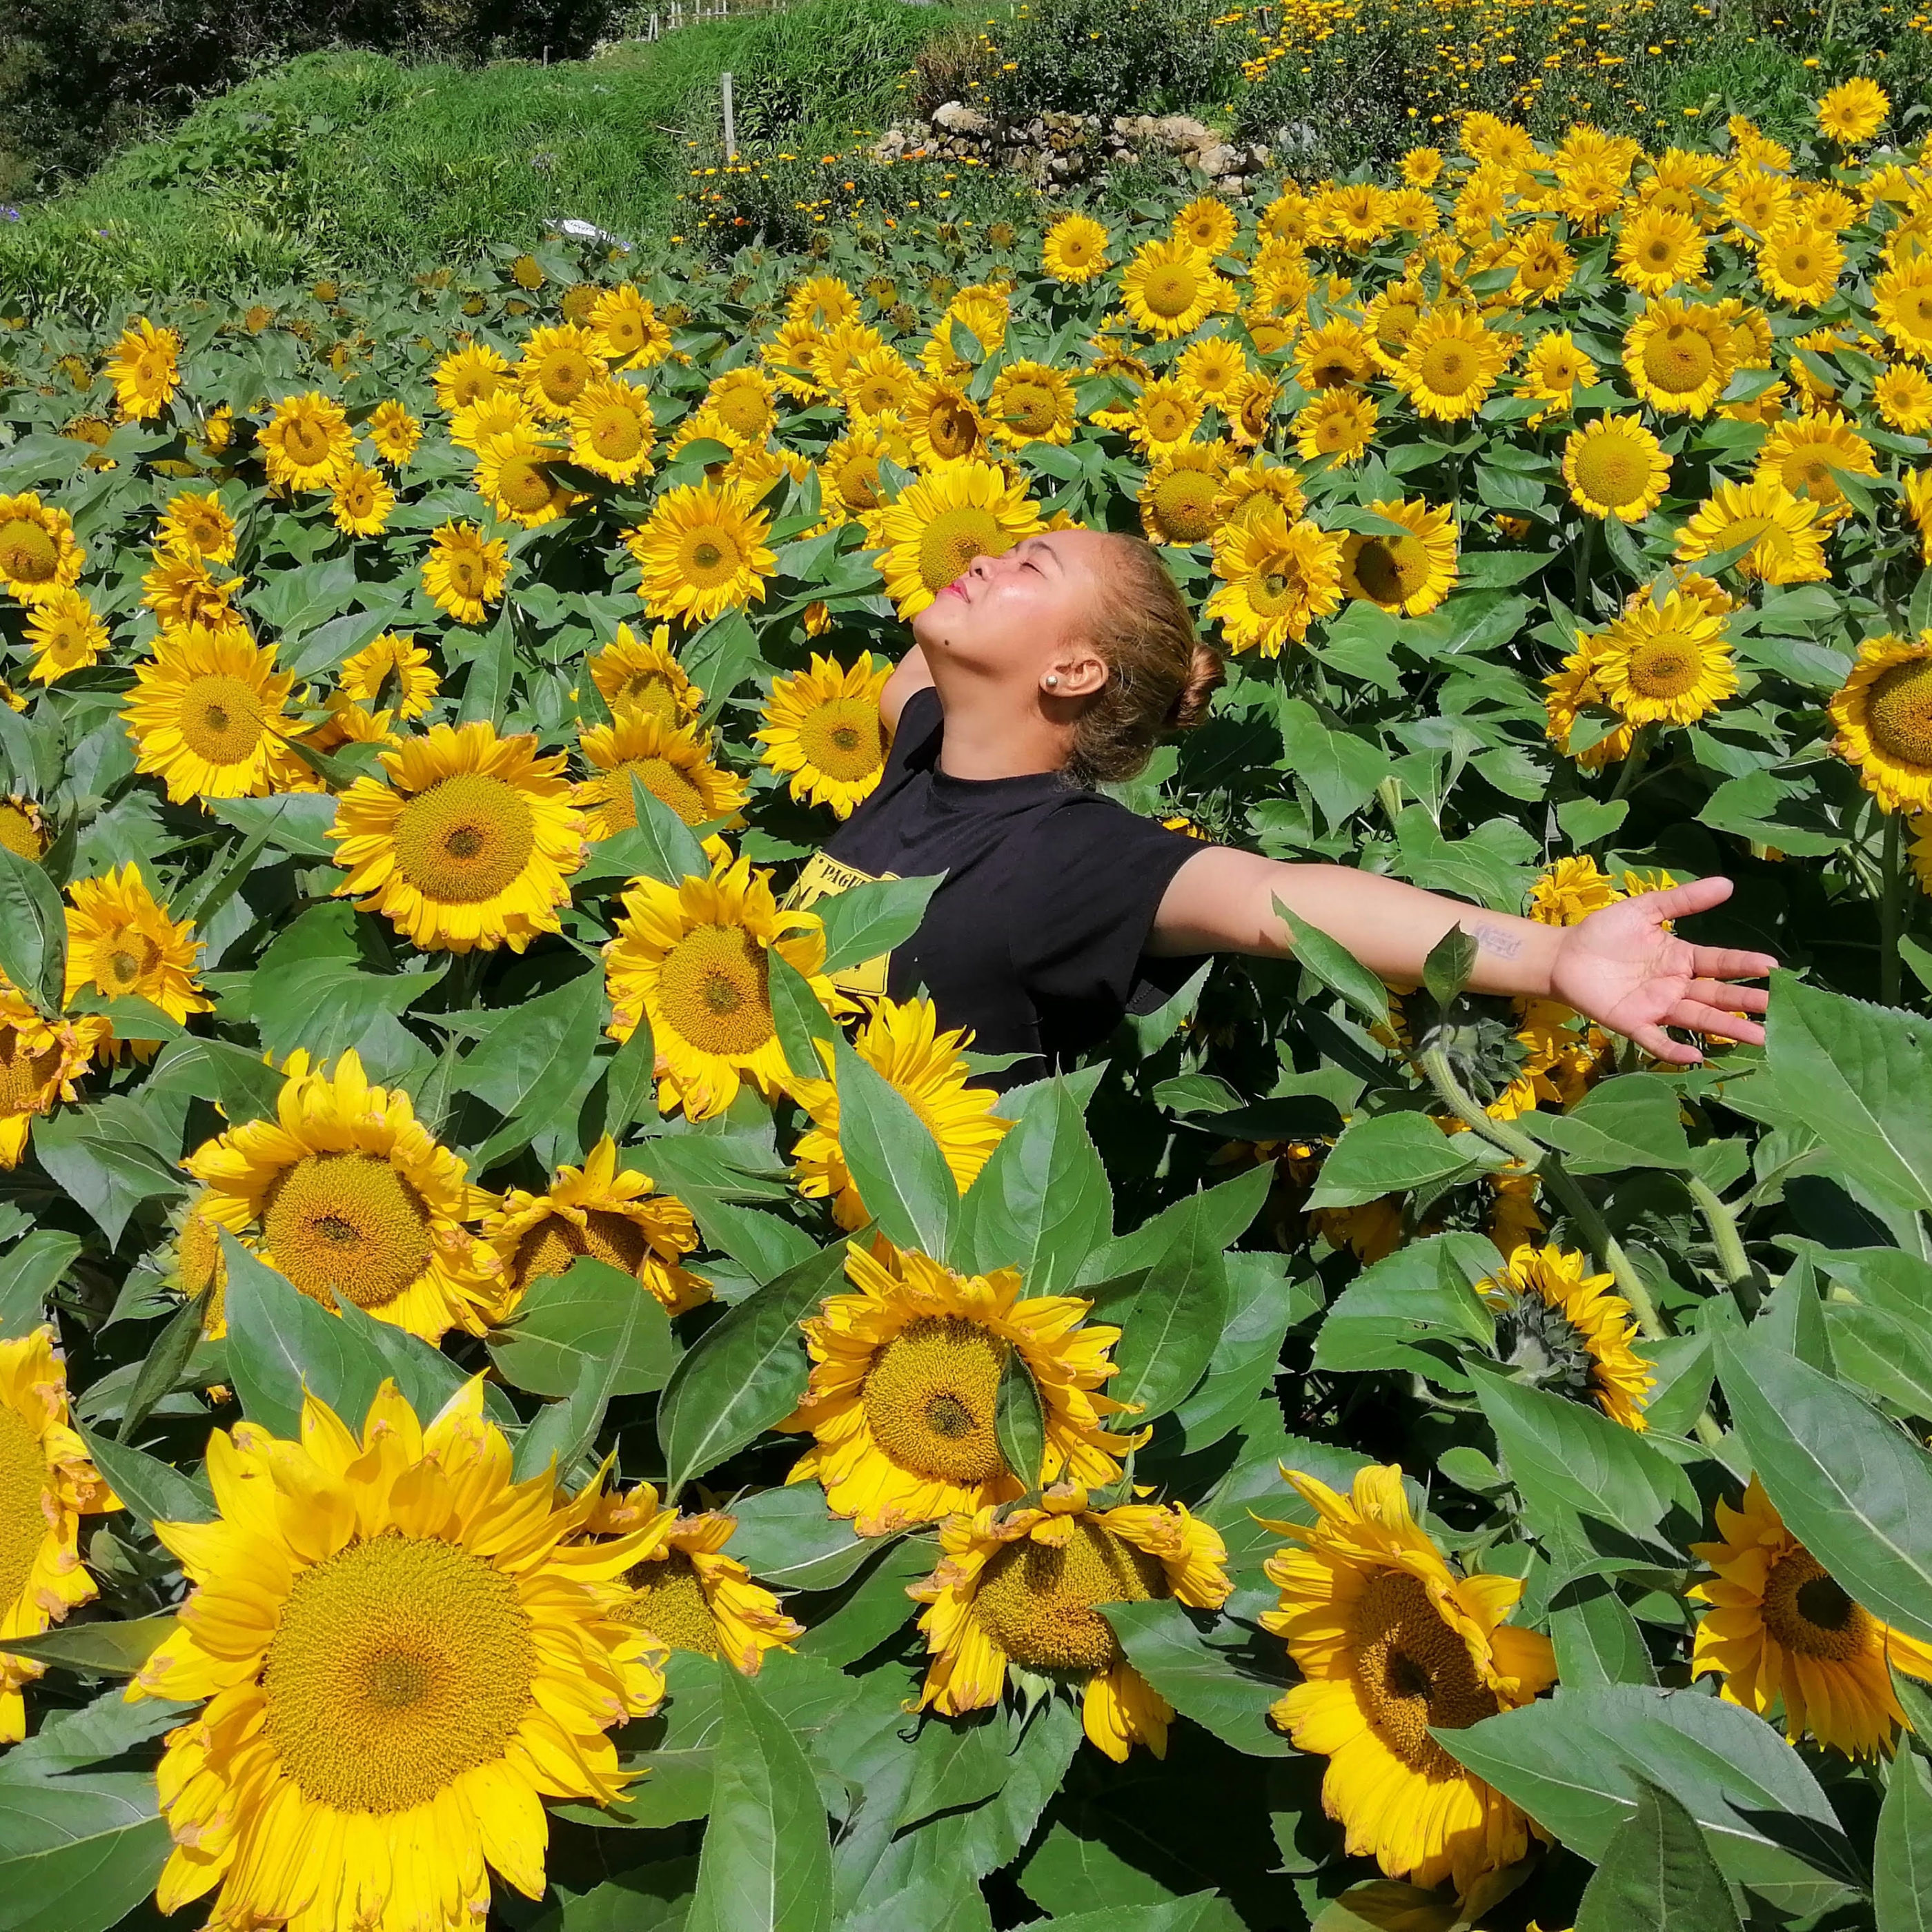 Exploring a sunflower farm in Atok, Philippines